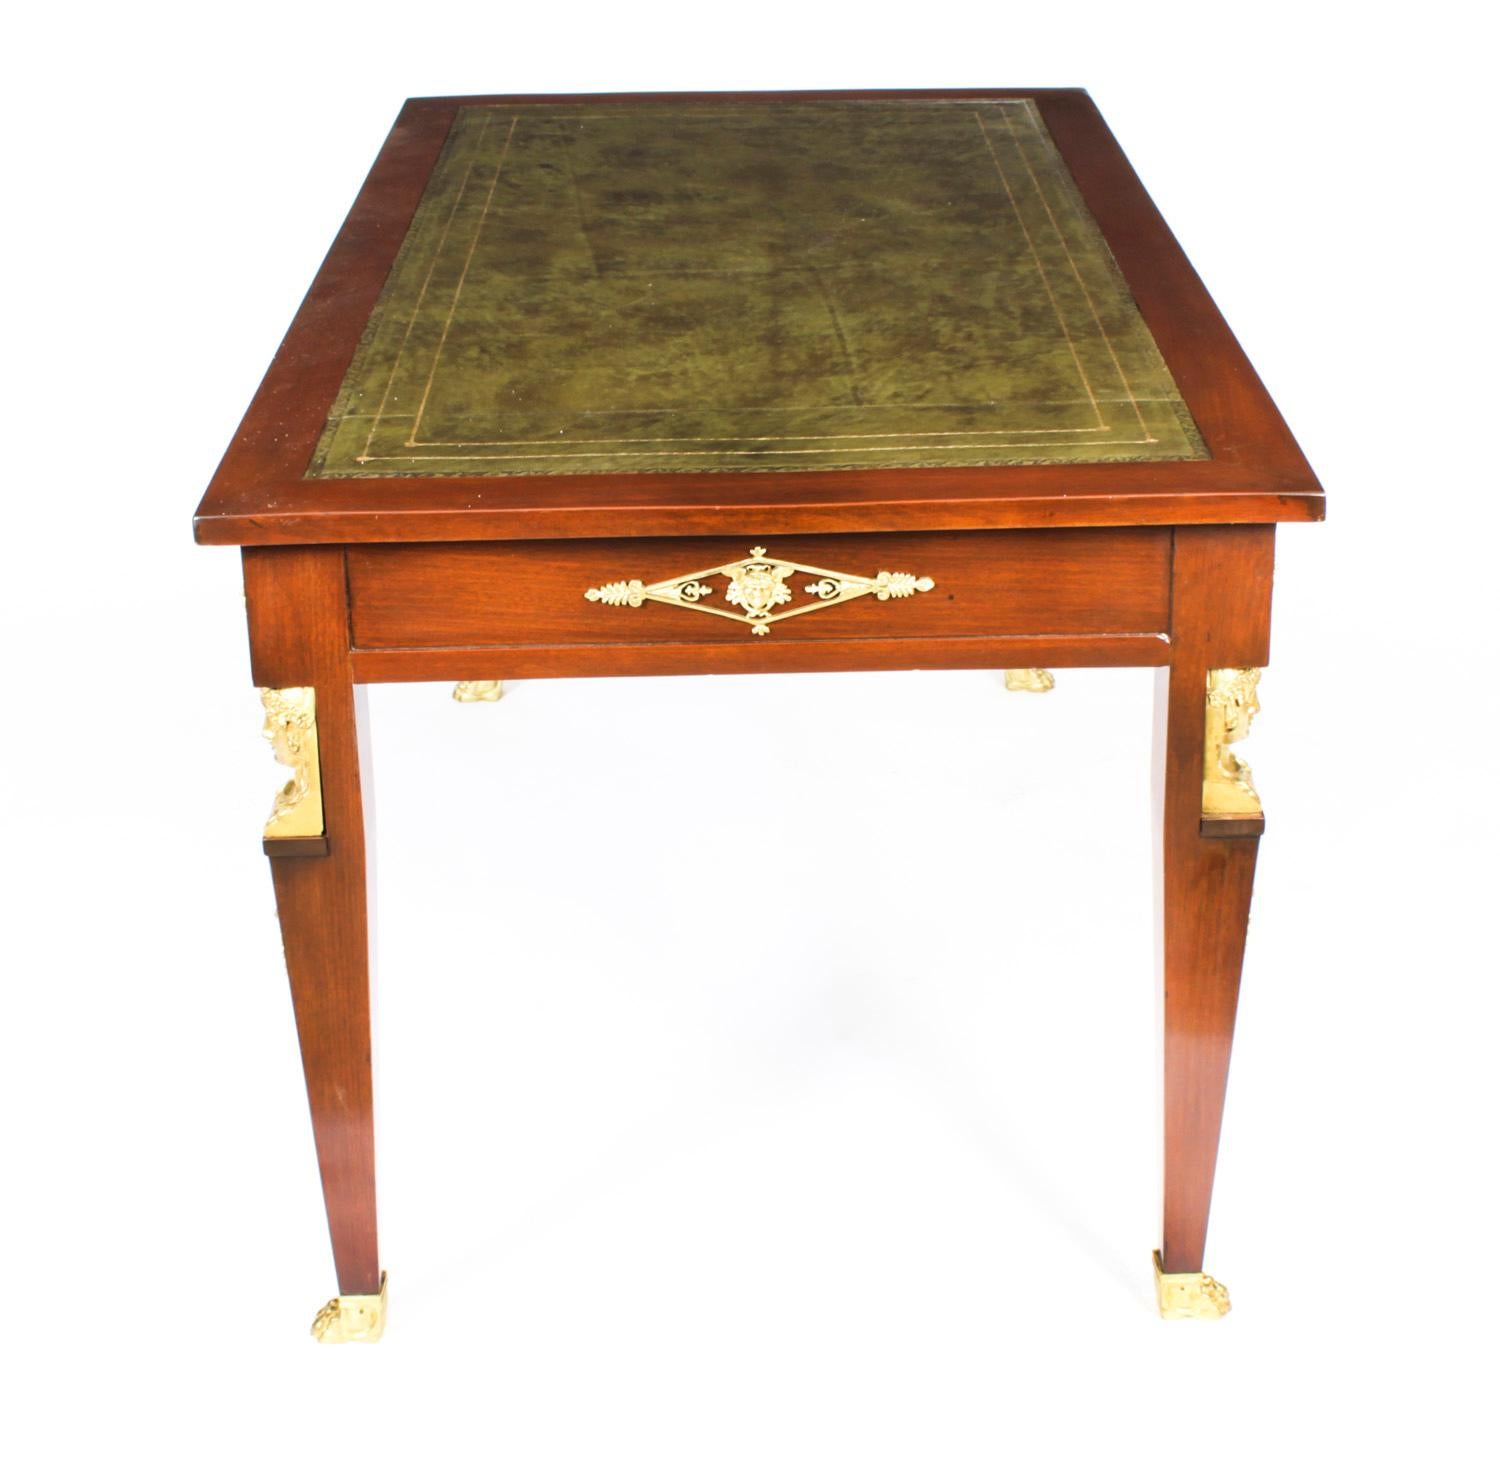 Mid-19th Century Antique Empire Revival Bureau Plat Desk Writing Table & Armchair 19th C